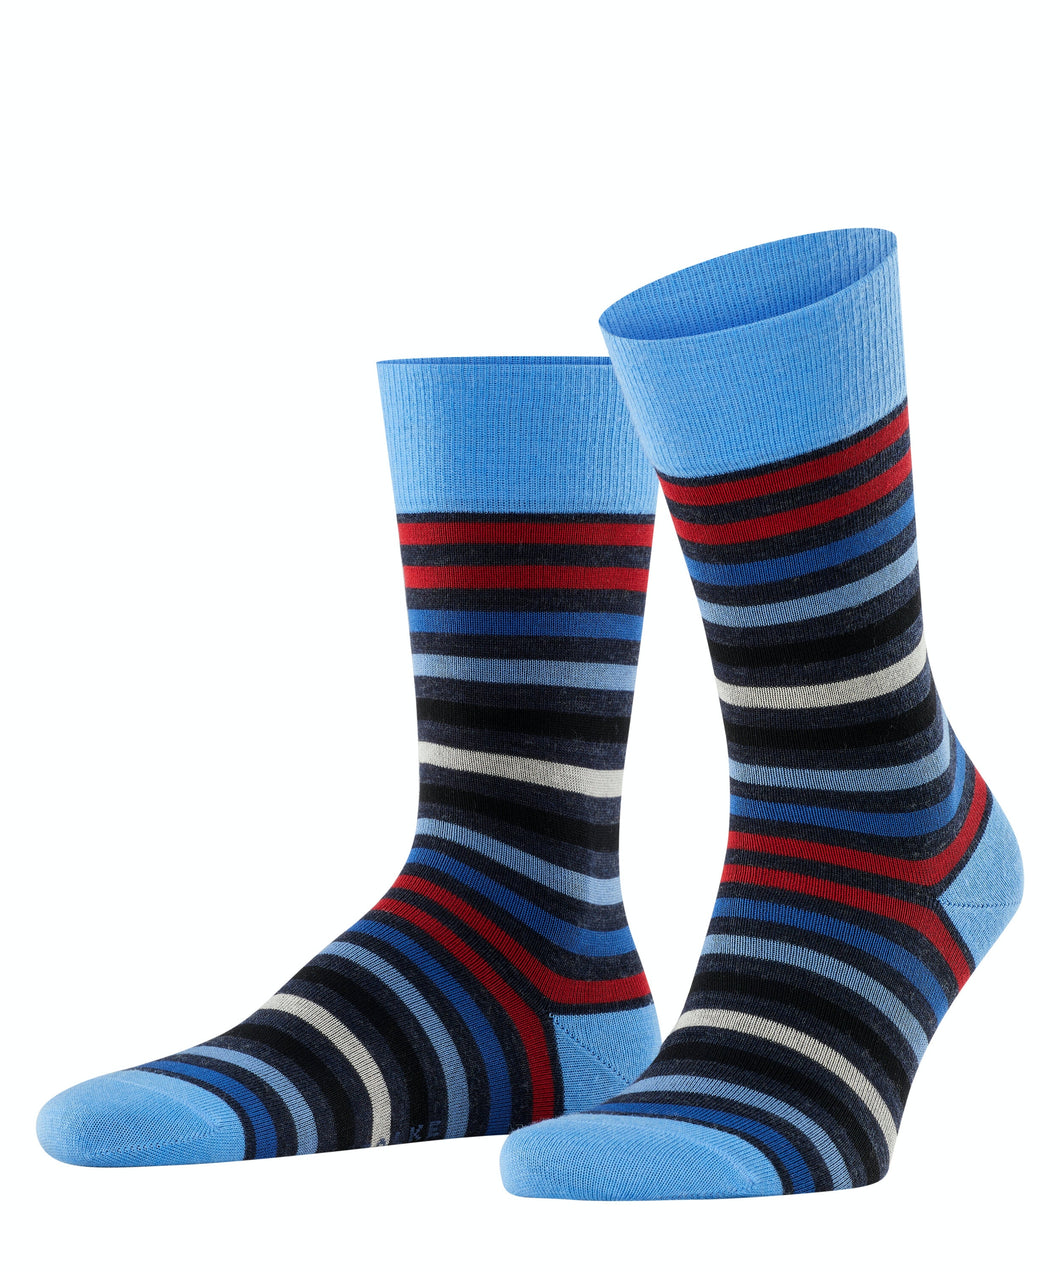 FALKE Tinted Stripe Socks in Sapphire-Red